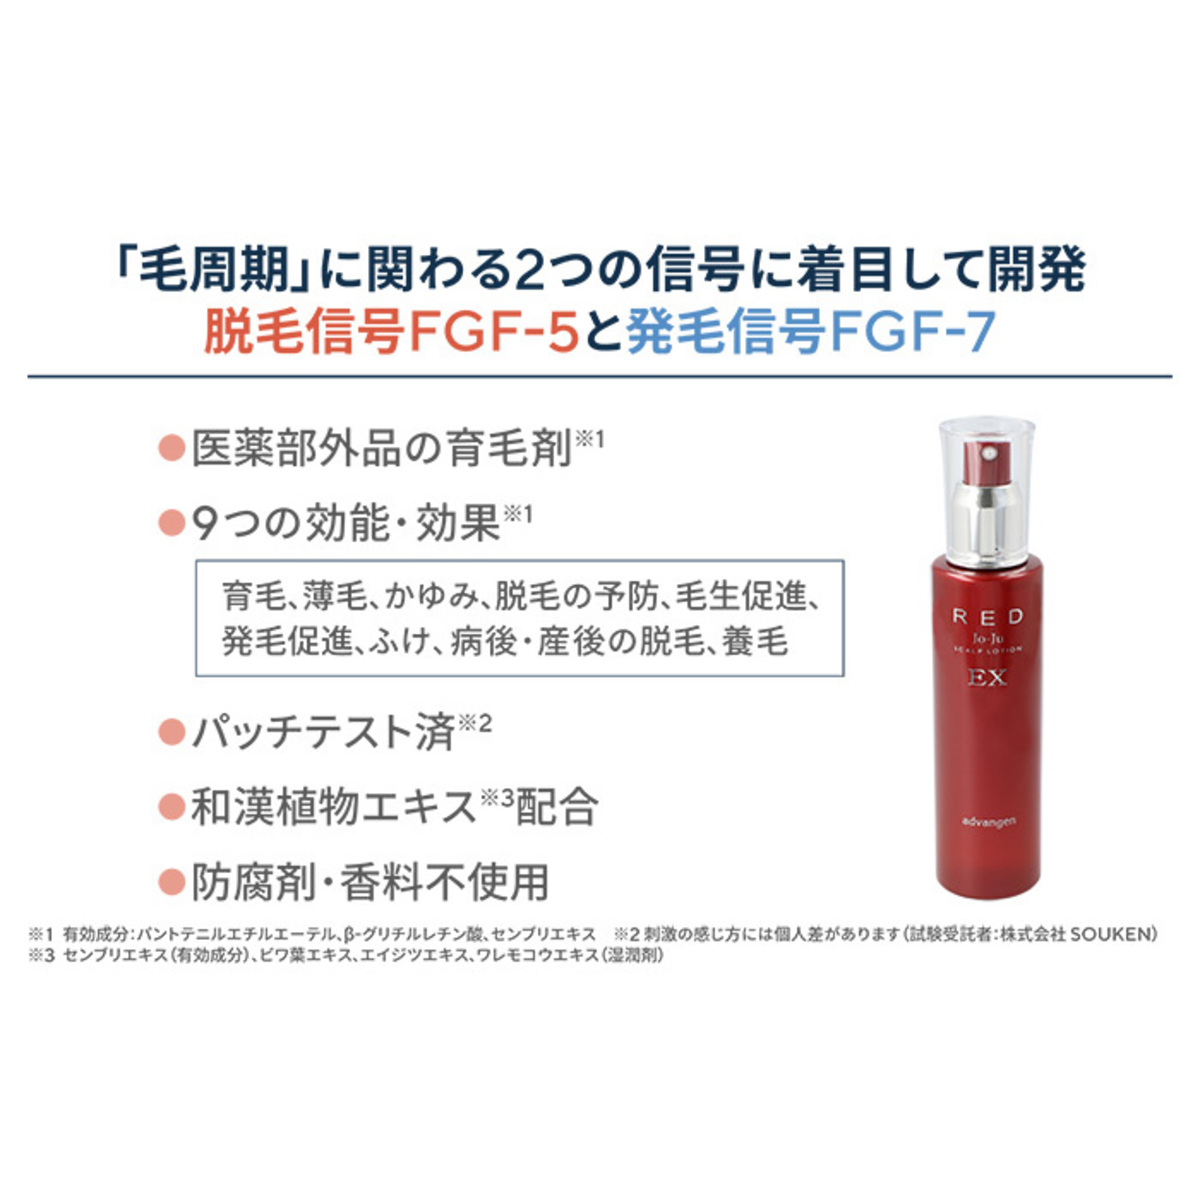 Jo-Ju RED スカルプローション2本+プレゼントセット - QVC.jp